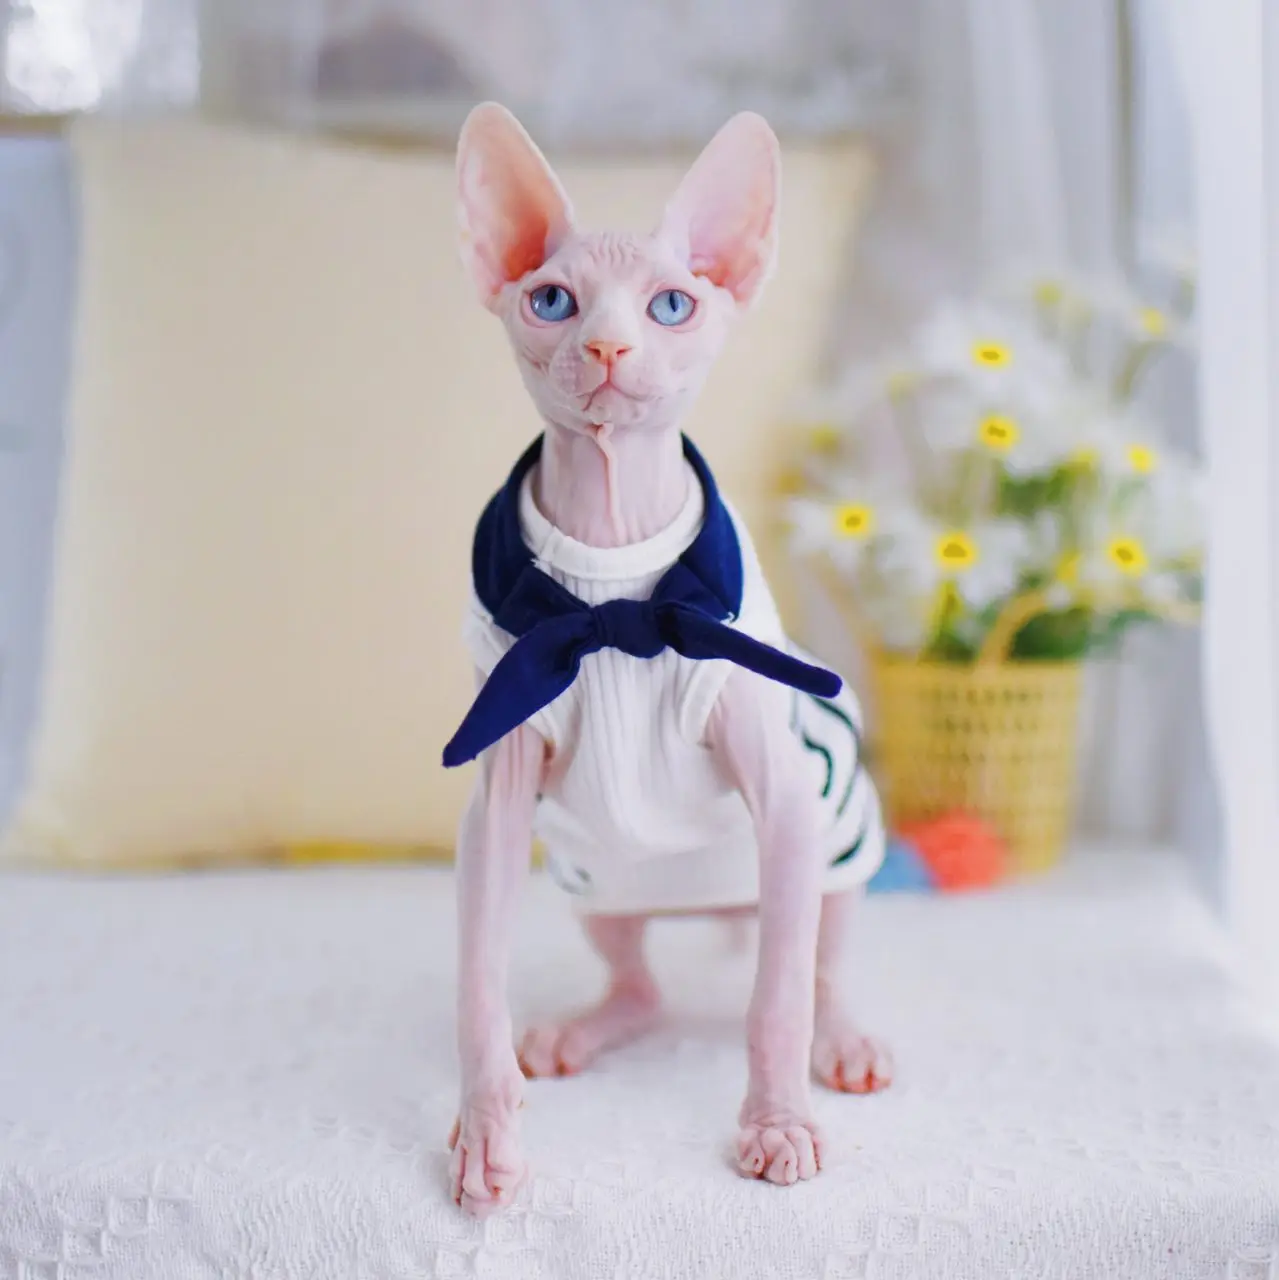 Sphynx Cat Clothes Hairless Cat Kitten Lovely Seaman Navy Cotton Sleeveless  Shirt Summer|Cat Clothing| - AliExpress